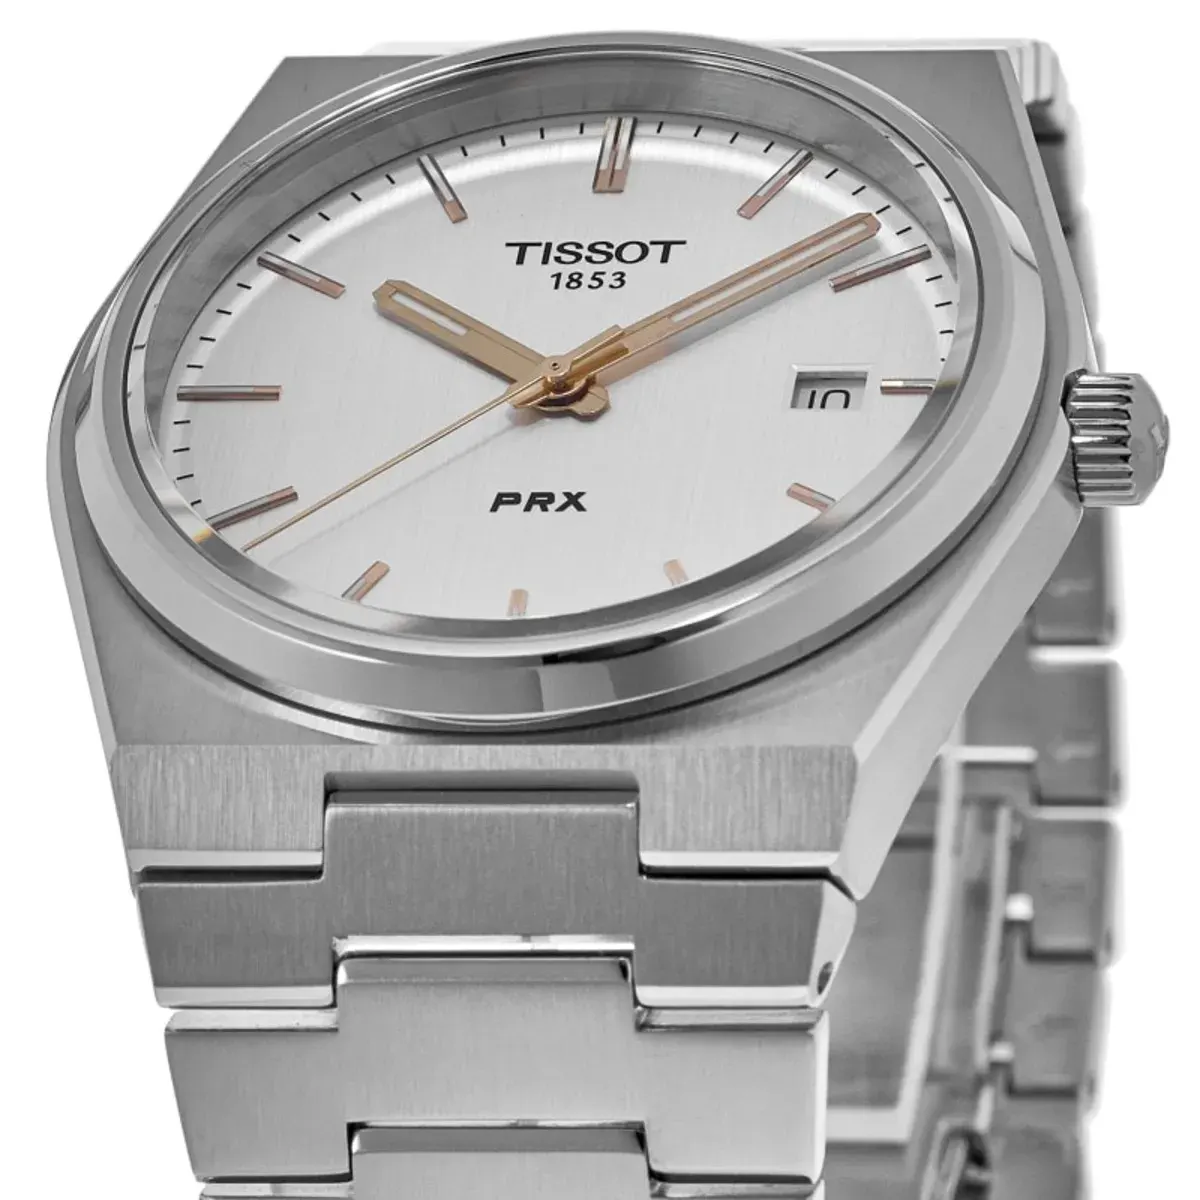 Tissot Women's Watch, Analog, Stainless Steel Strap, Silver, T137-210-11-031